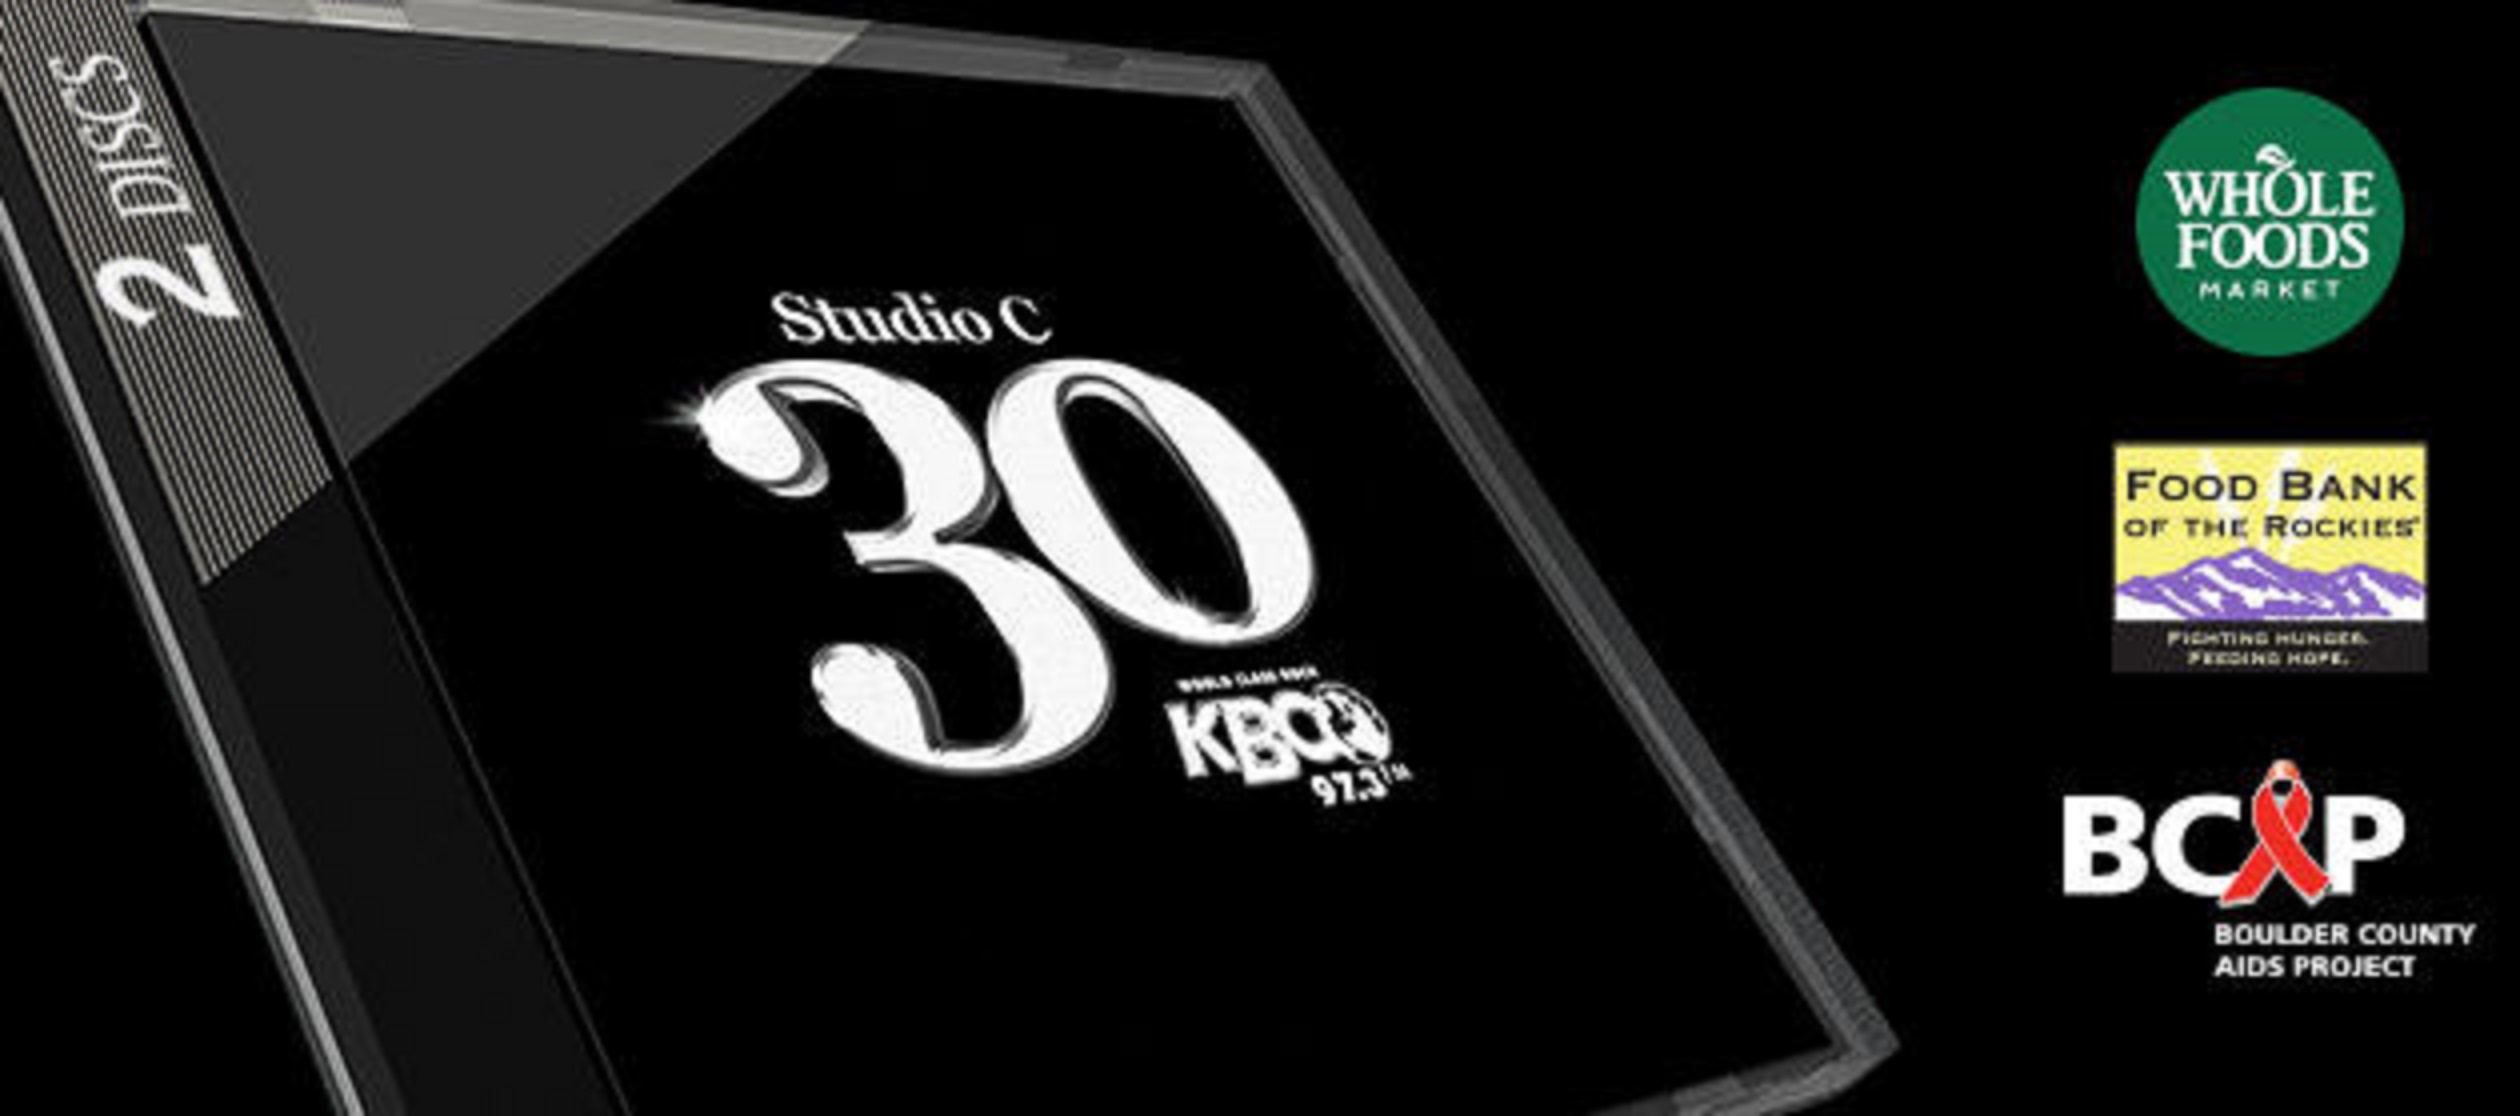 KBCO Announces Studio C 30th Anniversary 2-CD Release Date & Track Listing